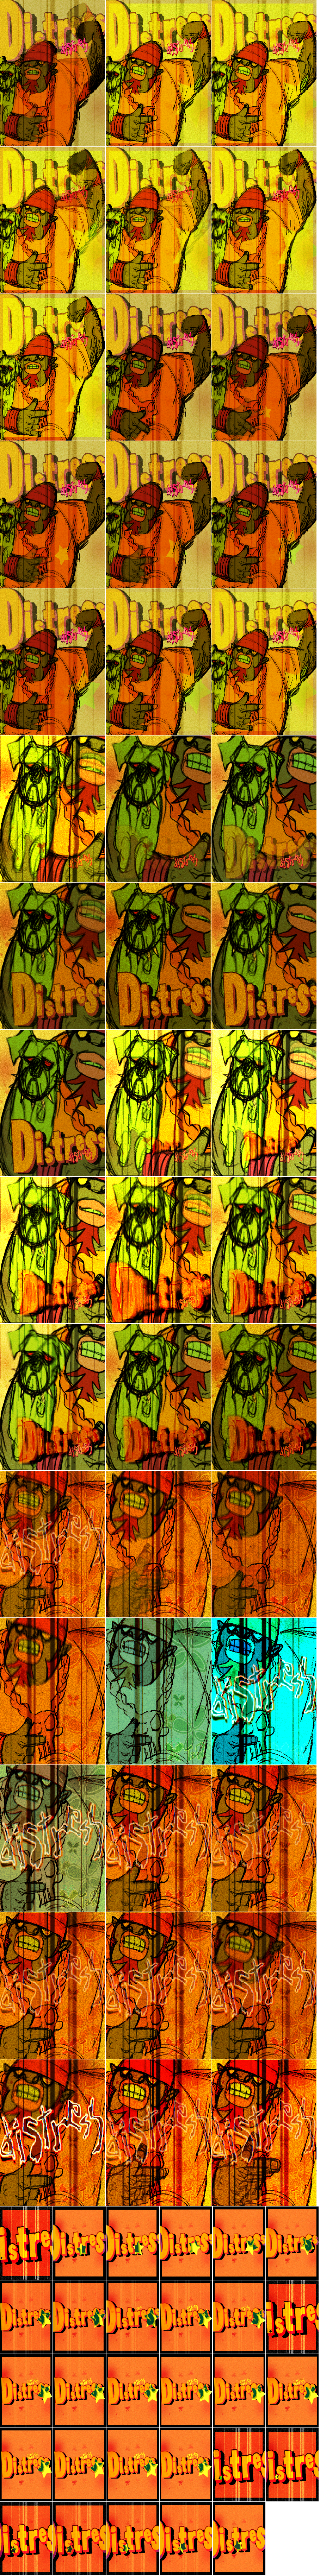 beatmania IIDX Series - Distress